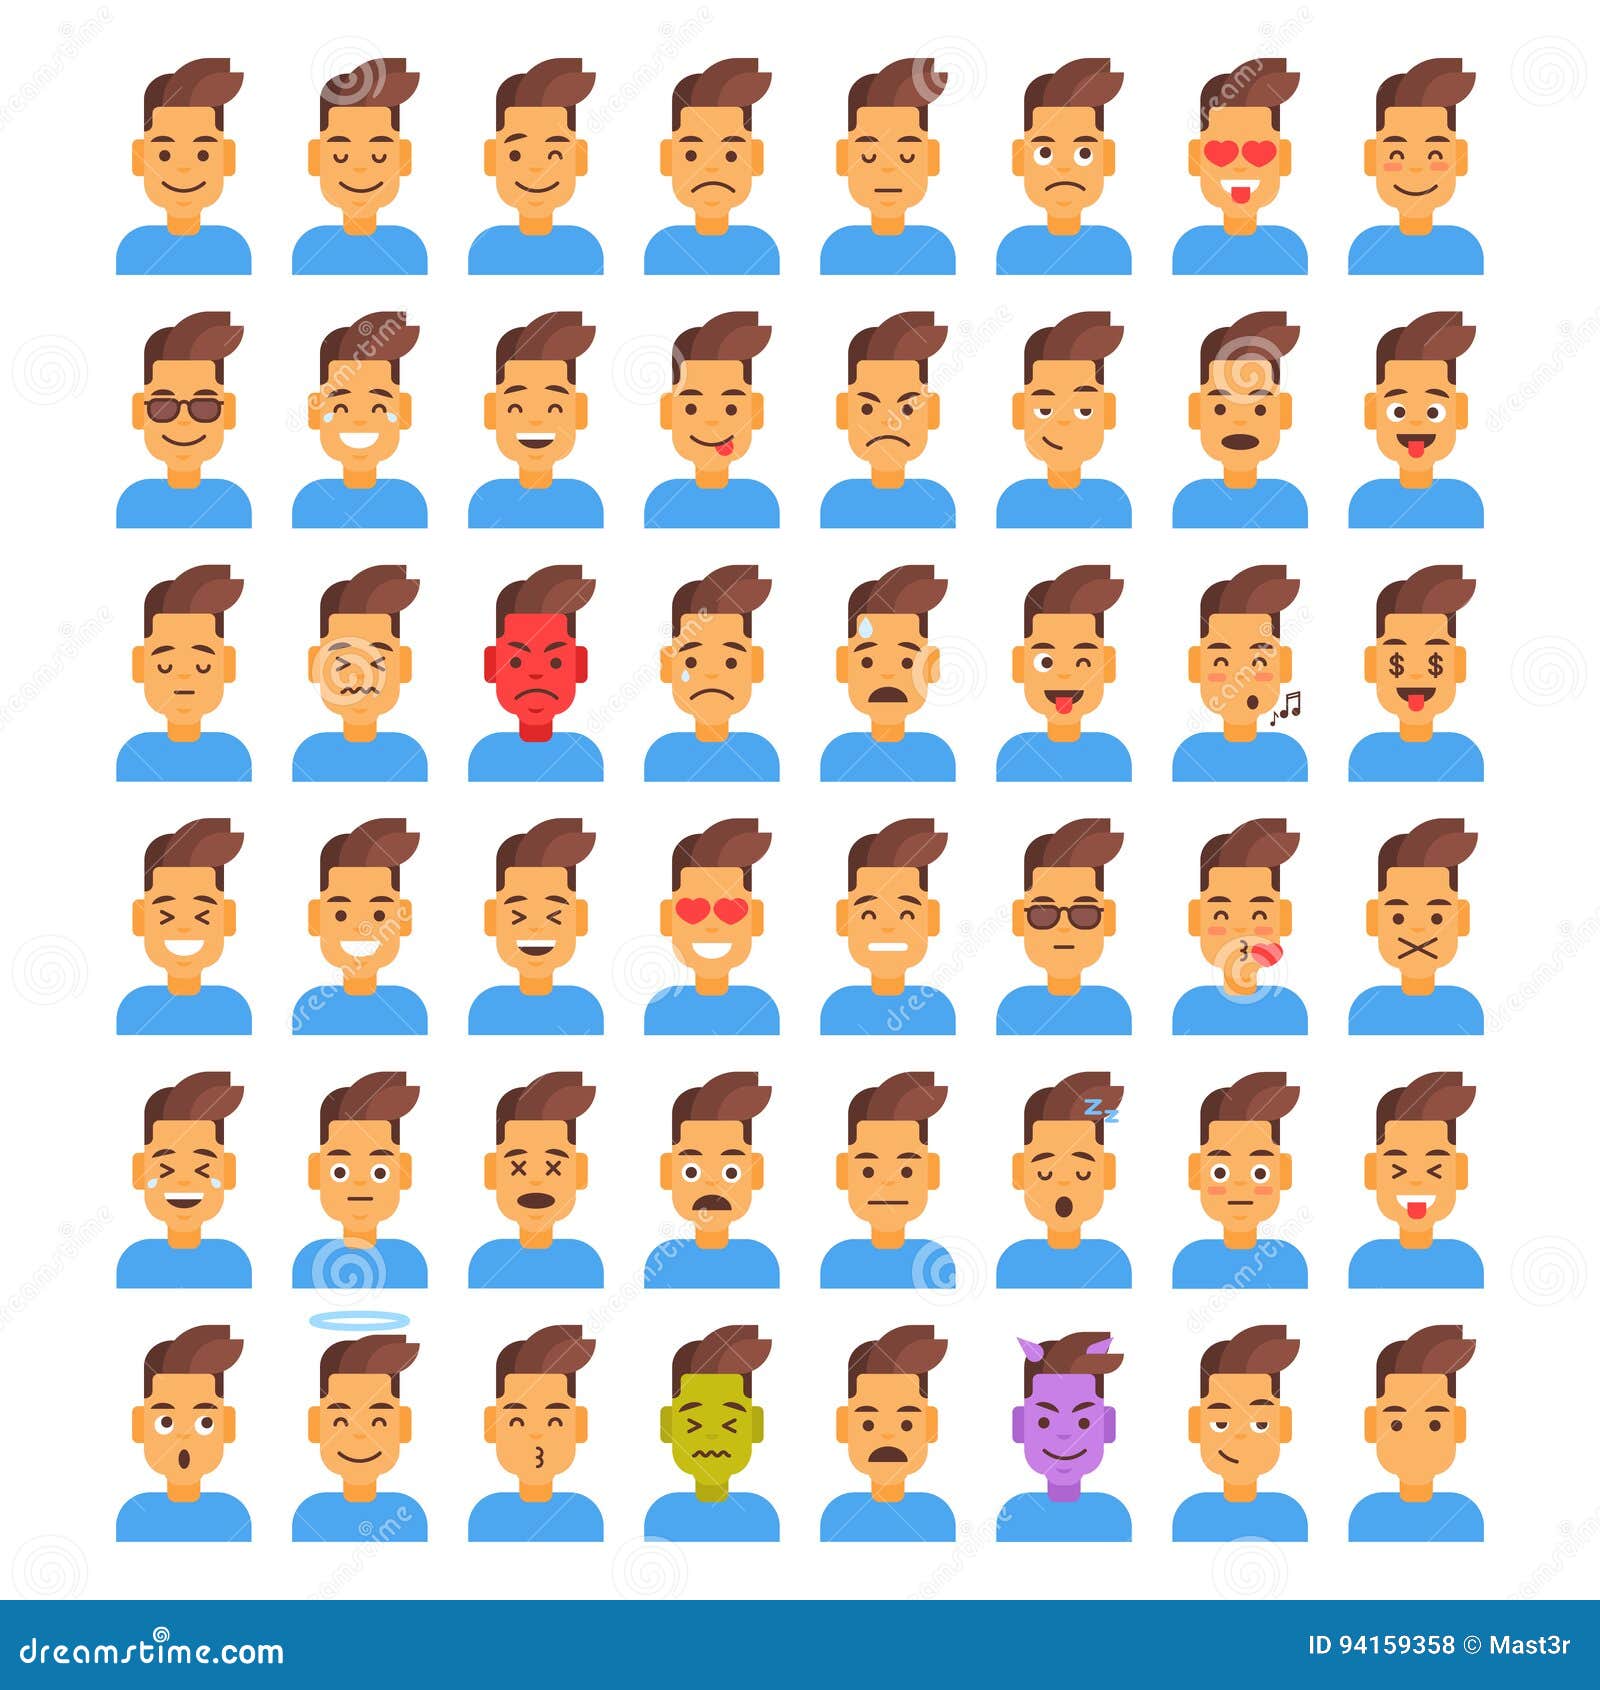 profile icon male different emotion set avatar, man cartoon portrait face collection